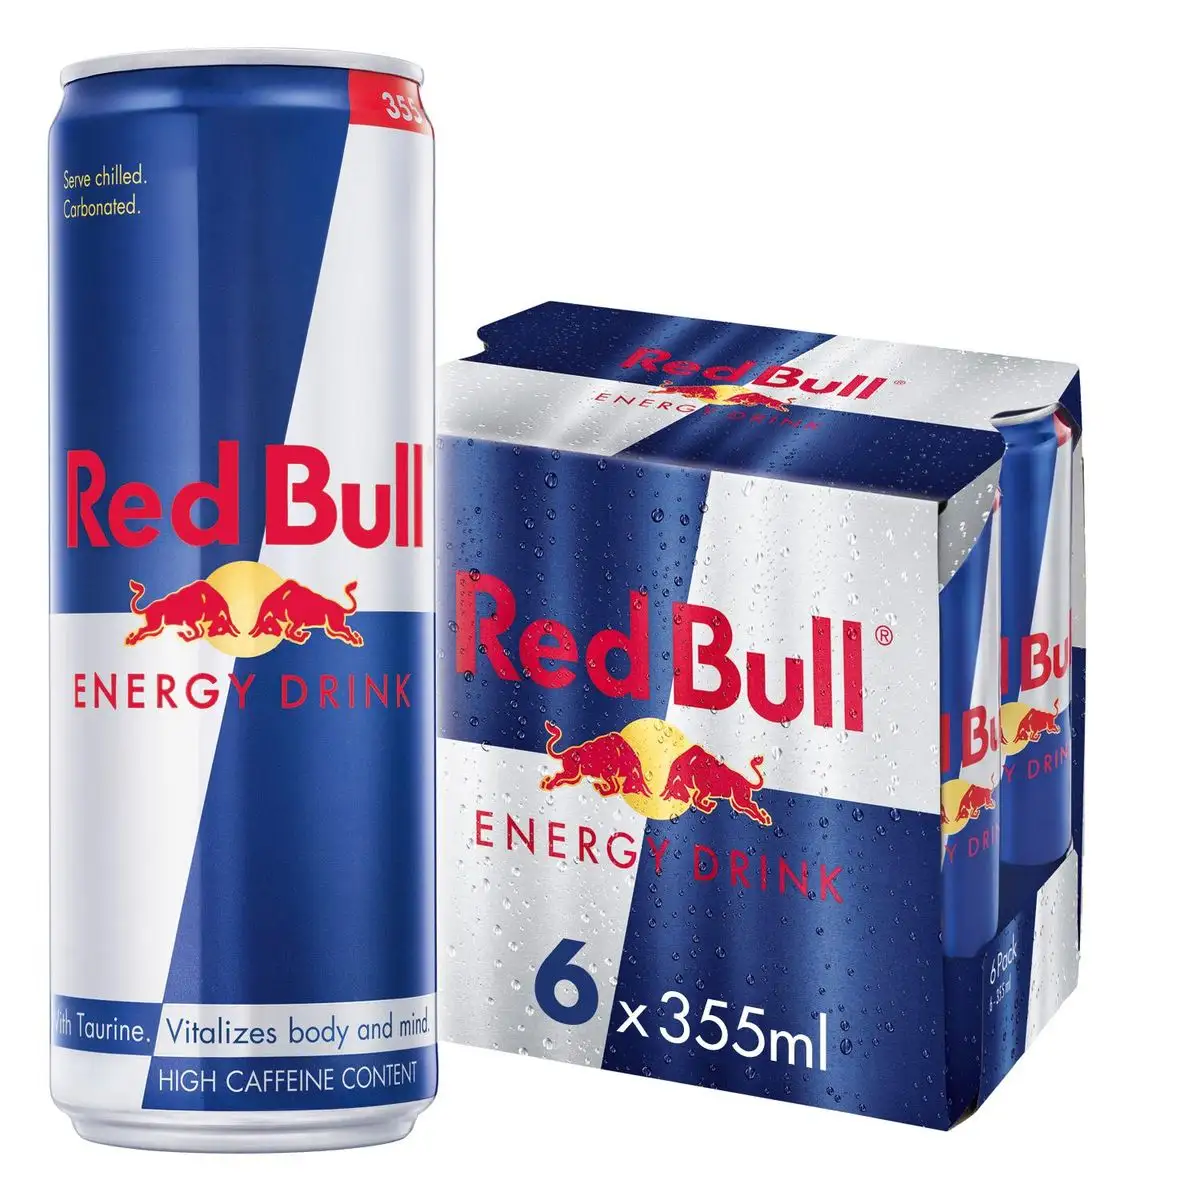 ORIGINAL Red Bull 250 ml Energy Drink from Austria/Red Bull 250 ml Energy Drink /Wholesale Redbull